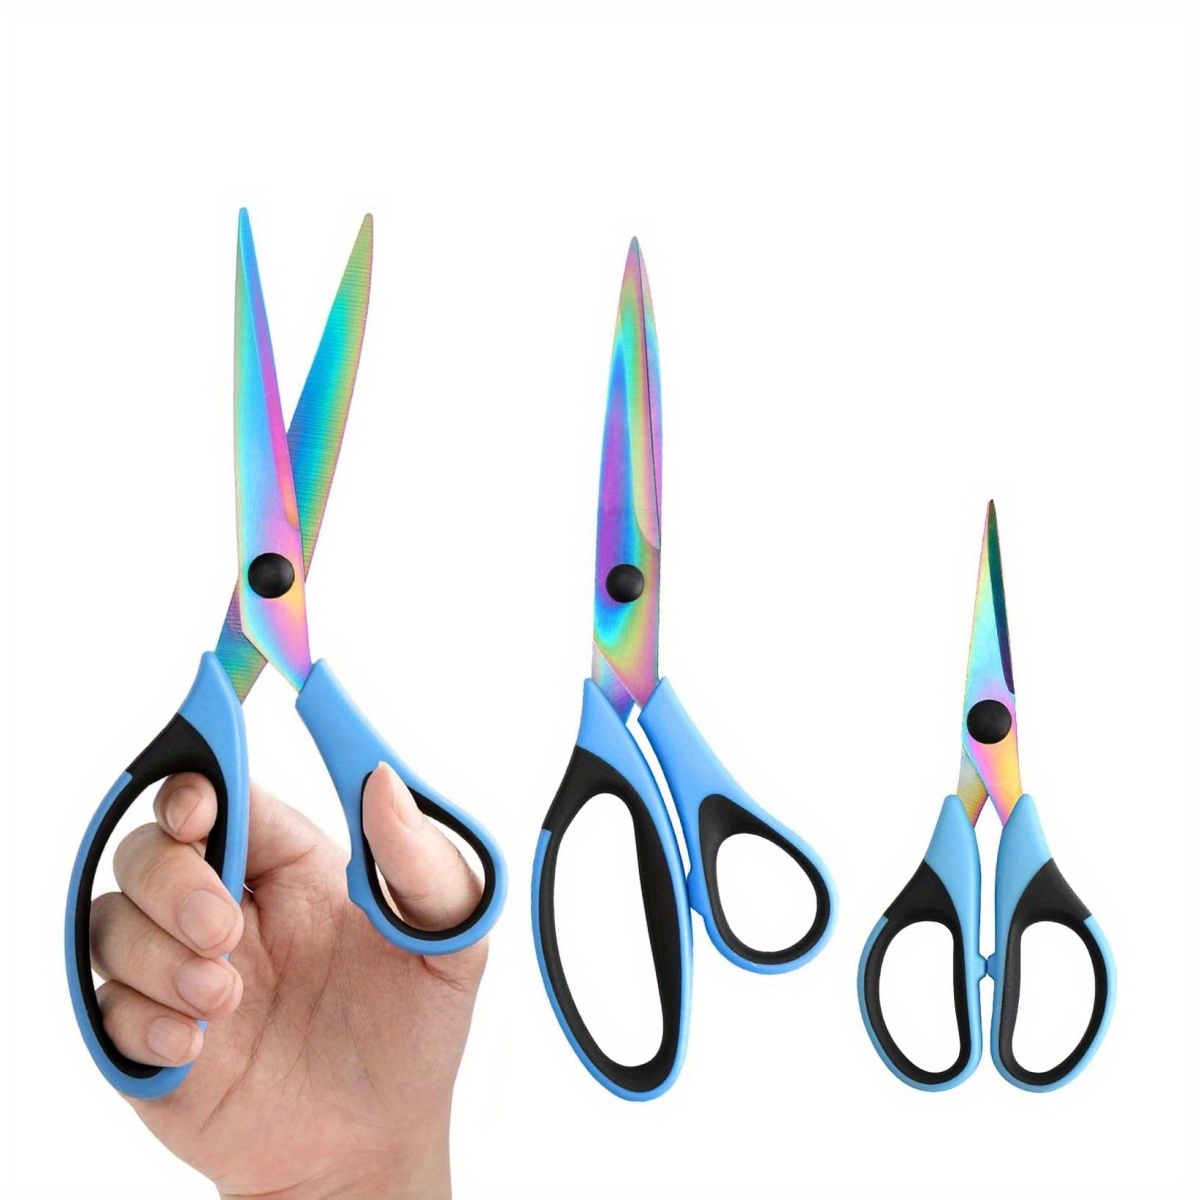 Scissors, iBayam 8 Multipurpose Scissors Bulk 3-Pack, Ultra Sharp Blade Shears, Comfort-Grip Handles, Sturdy Sharp Scissors for Office Home School